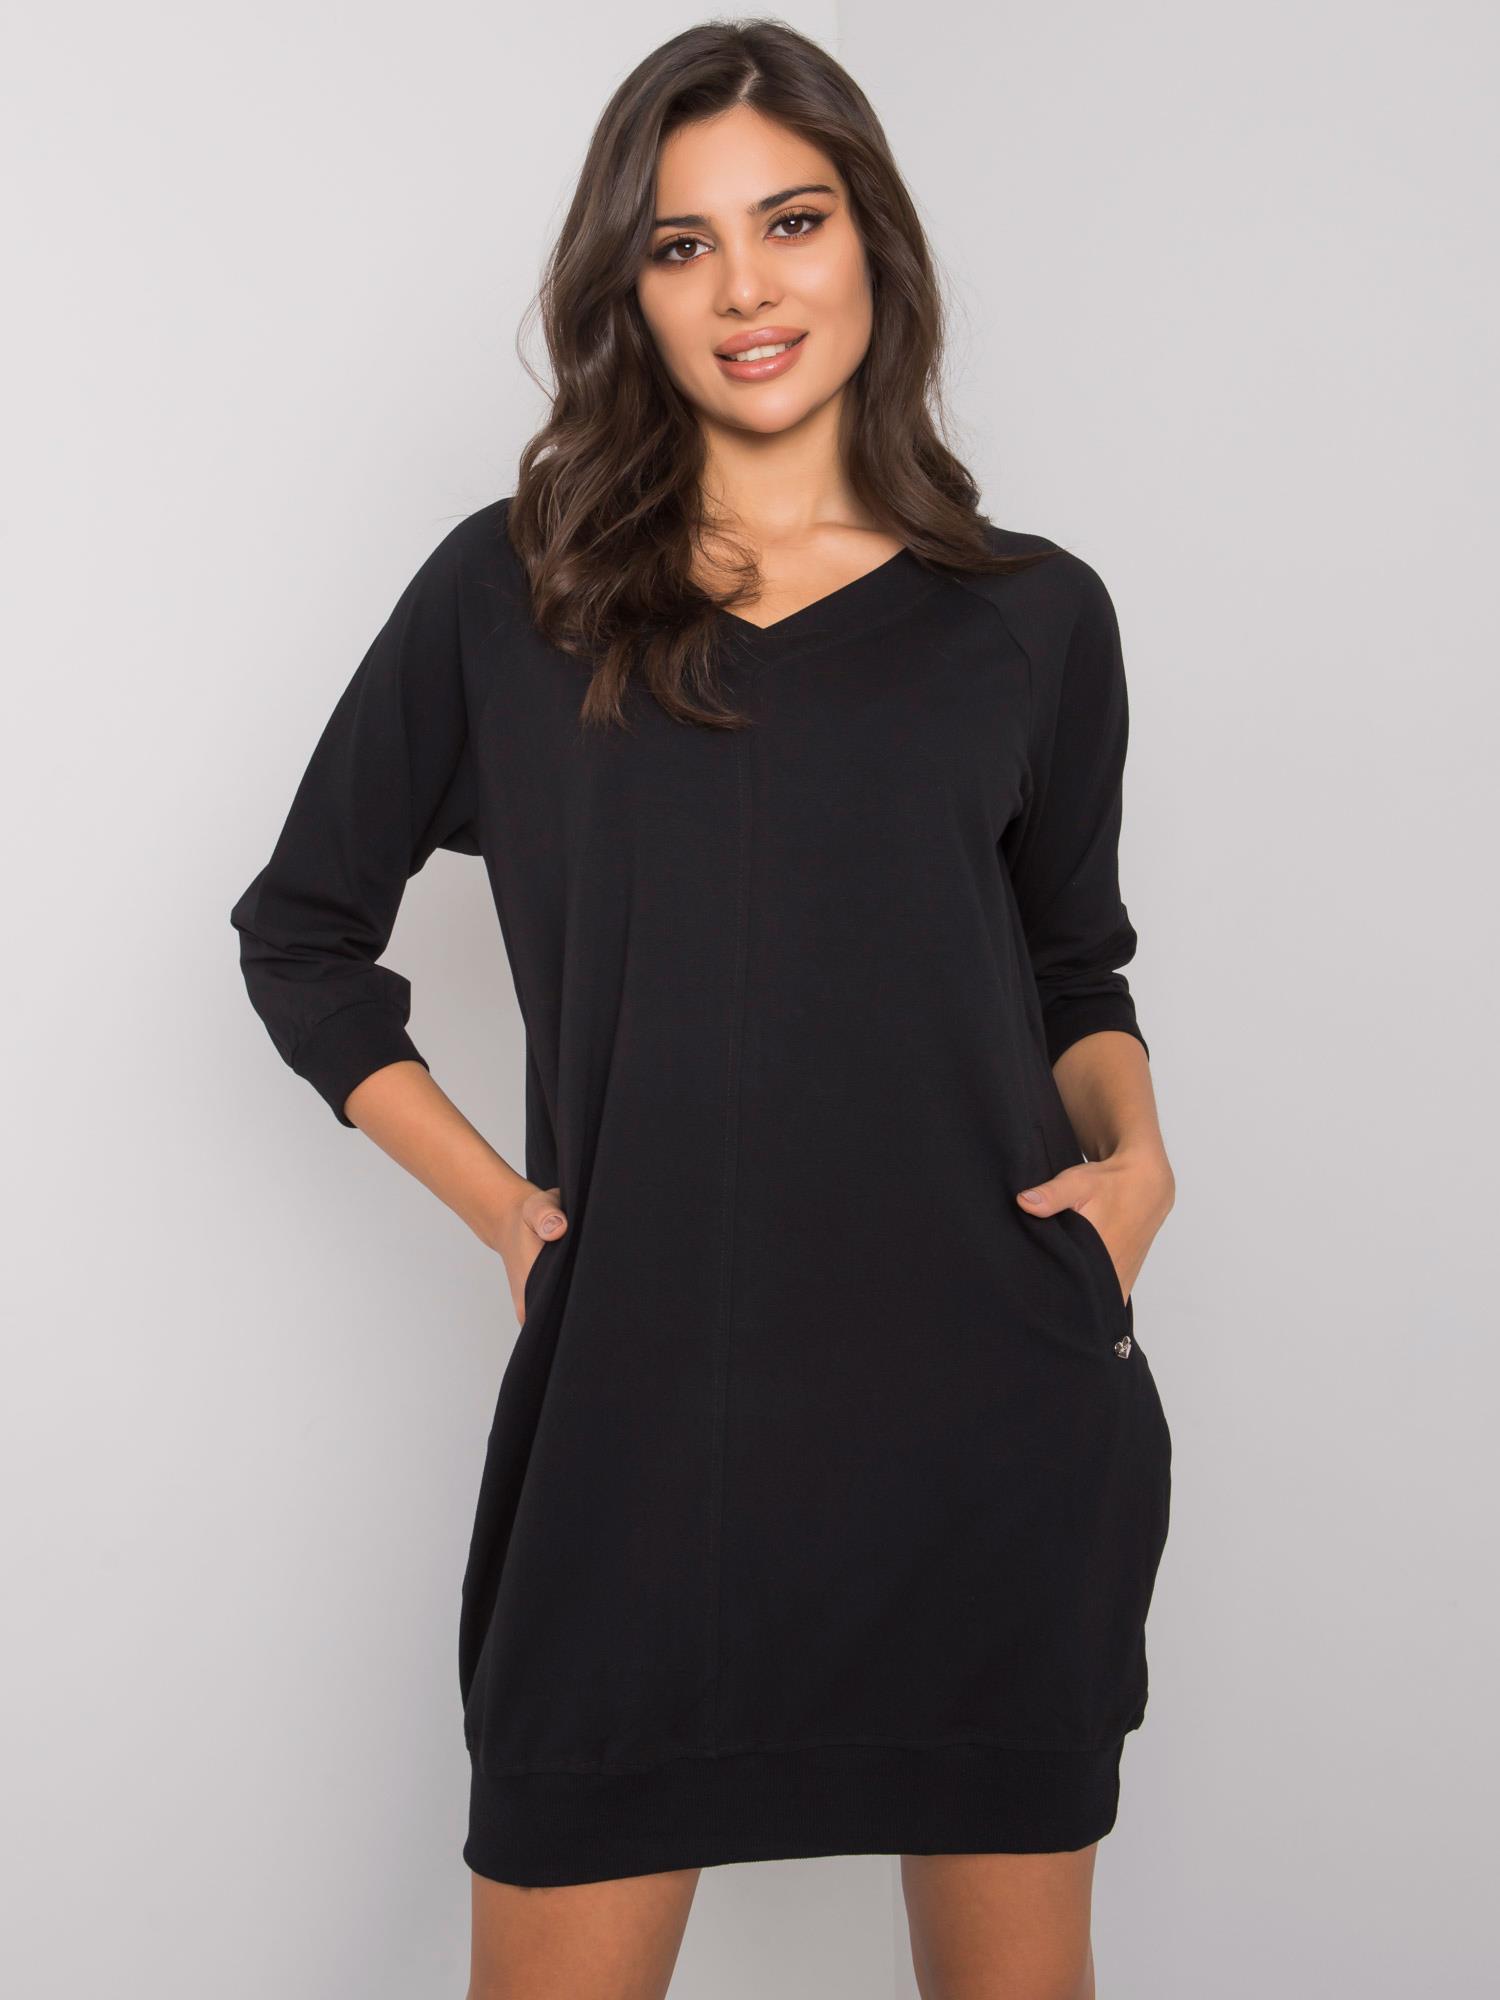 Černé mikinové šaty s kapsami RV-SK-7203.35P-black Velikost: S/M